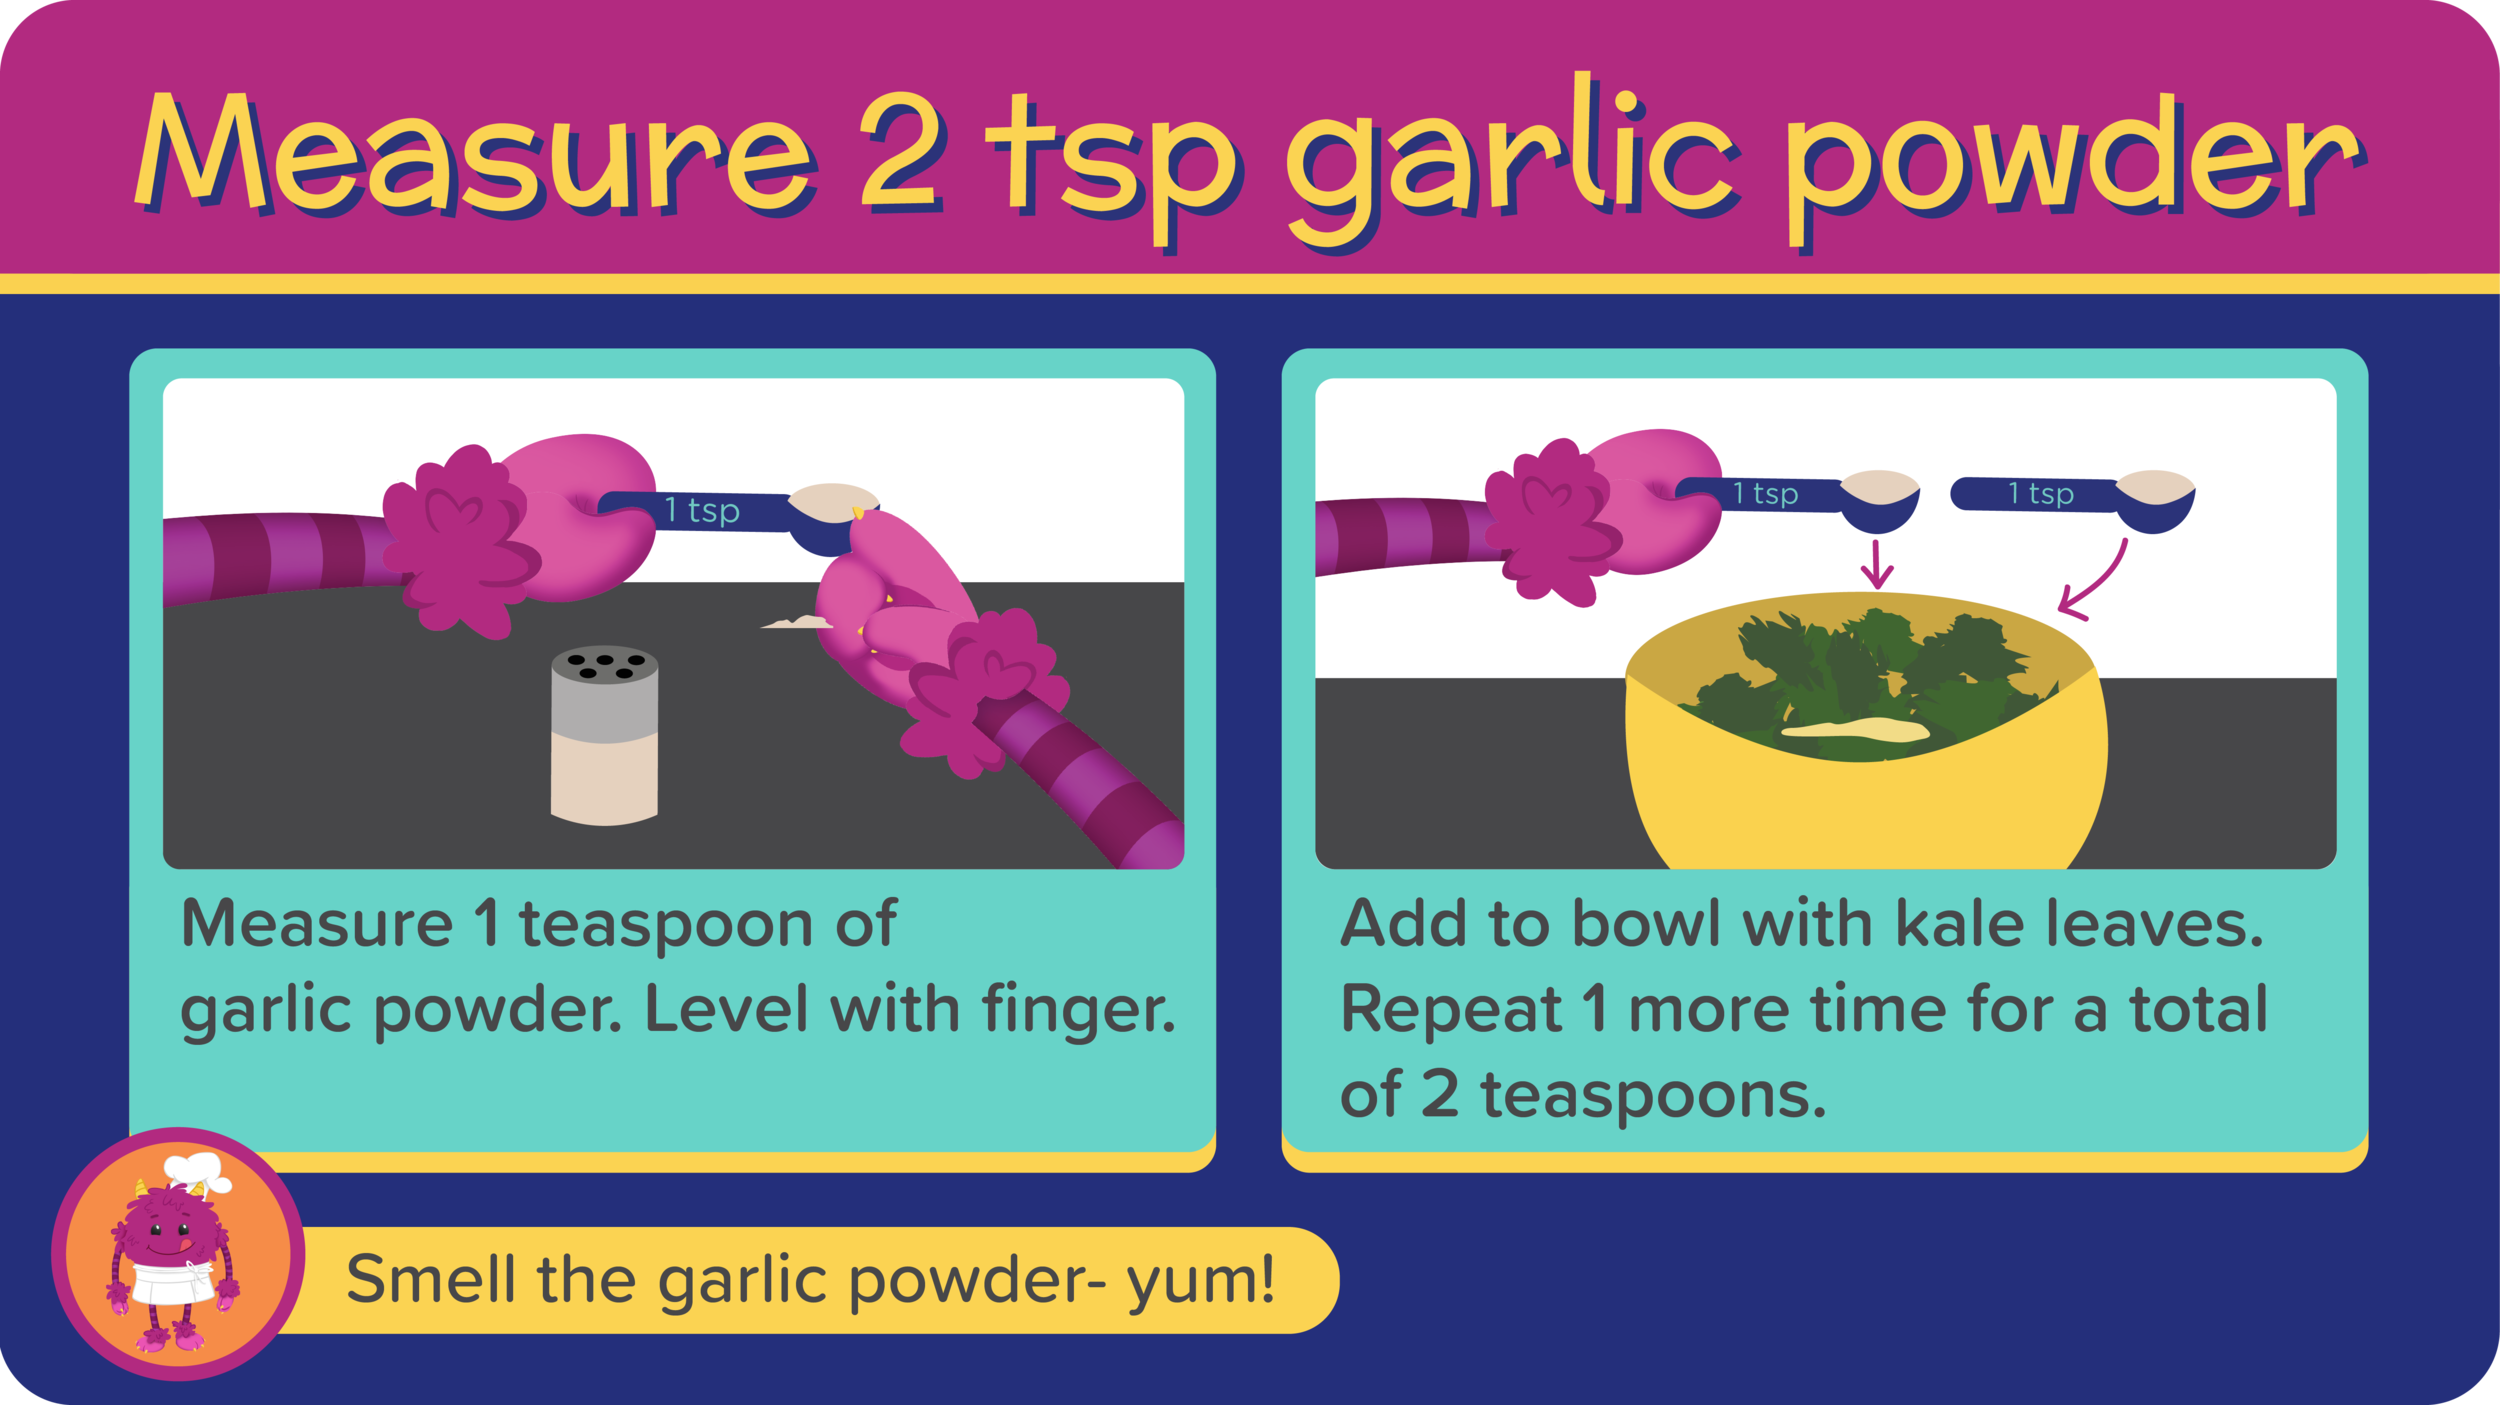 16_SpicyTacoKaleChips_add garlic powder-01.png